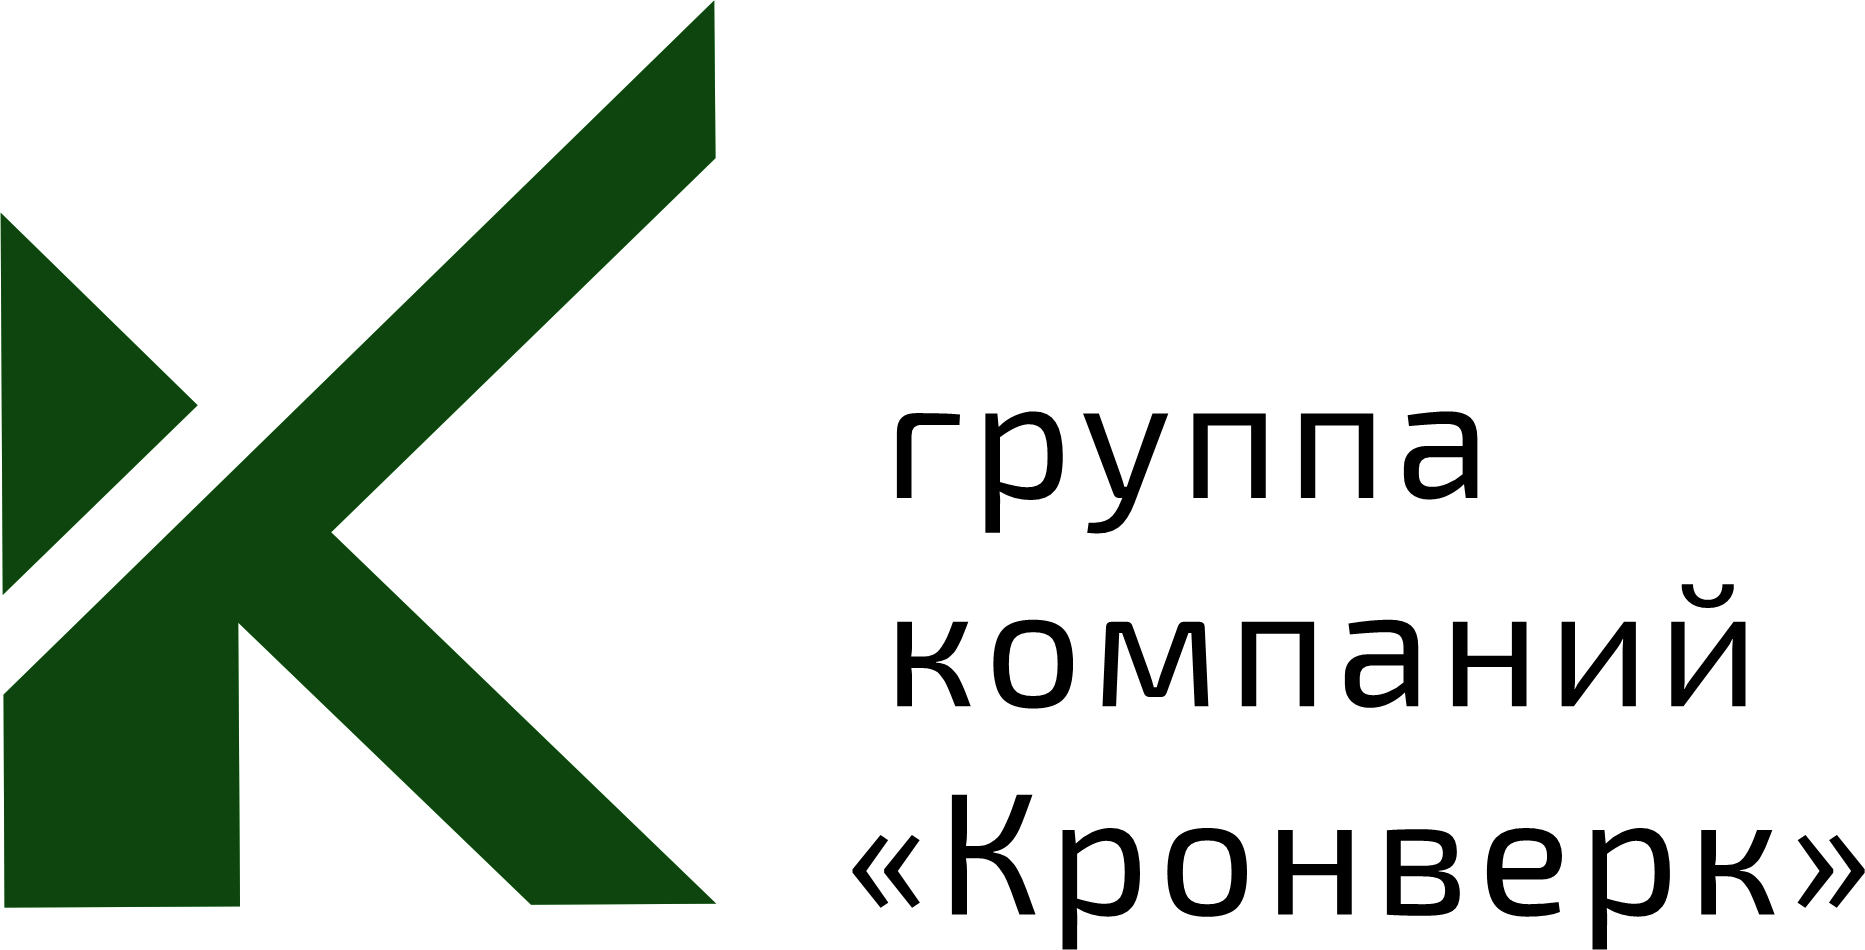 logo_k.jpg